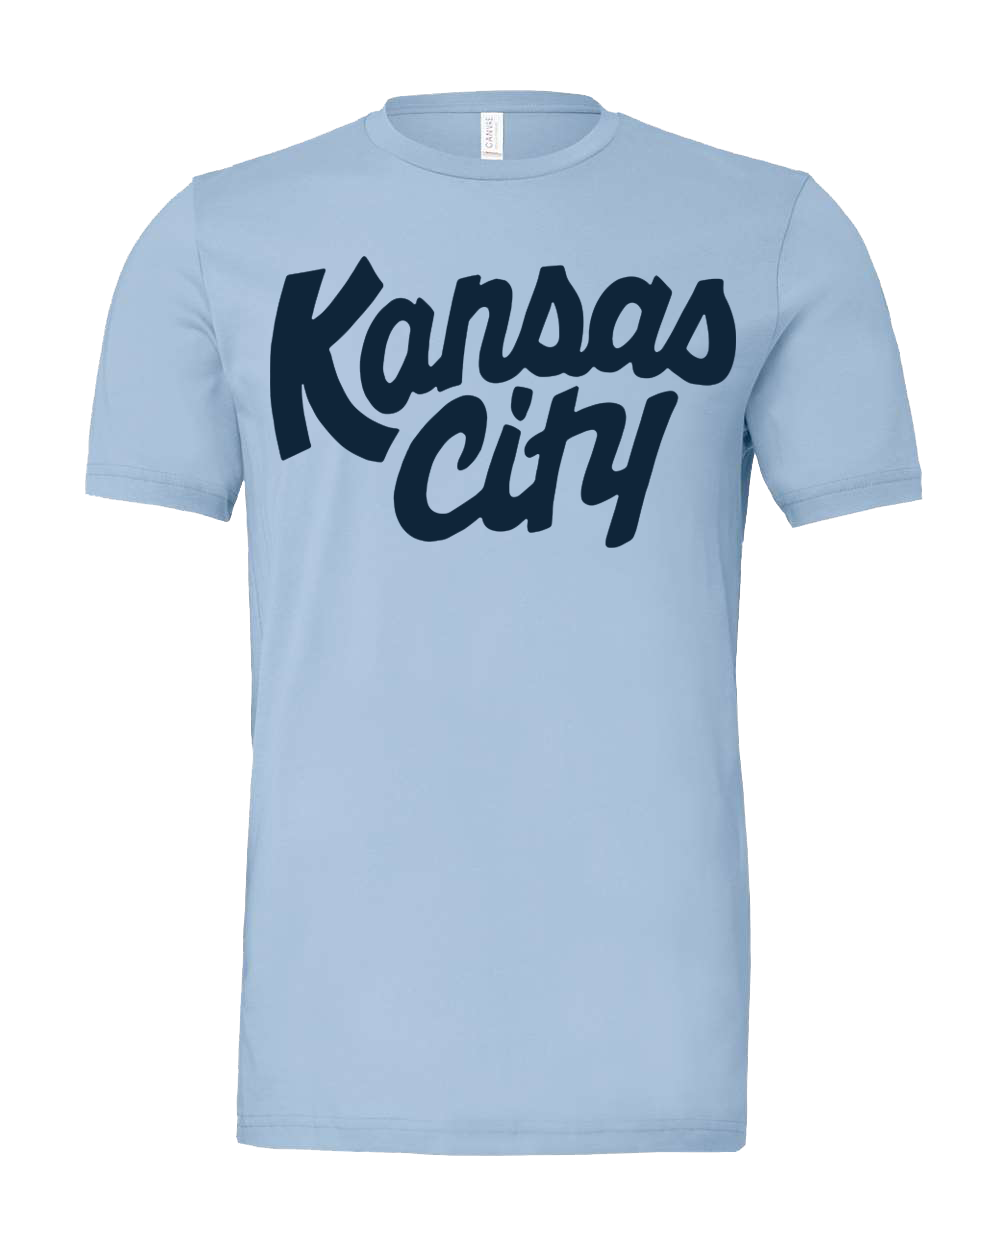 Kansas City, America's Team Tee S / White